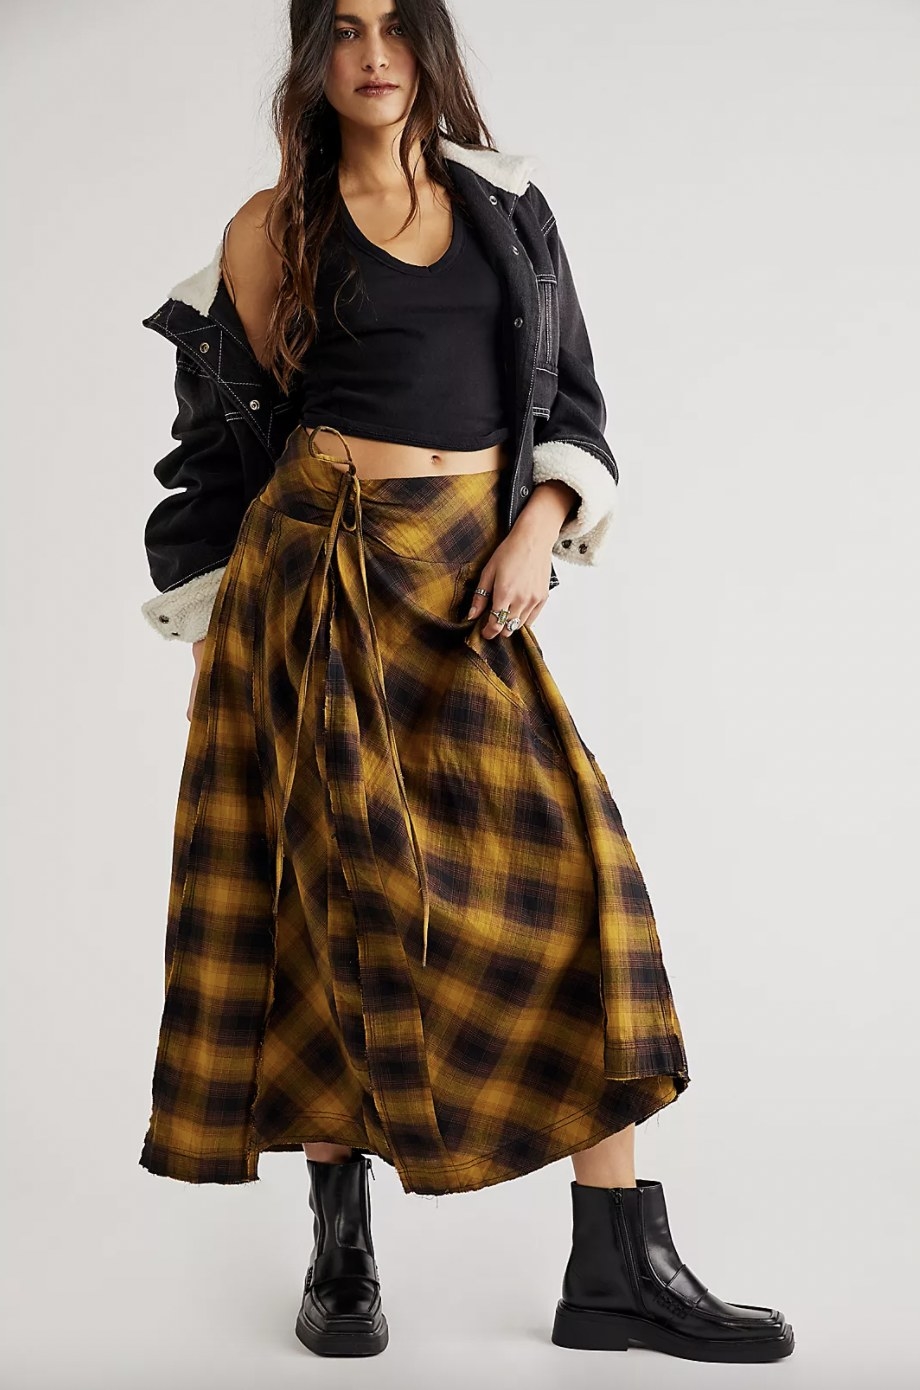 Model wearing maxi skirt